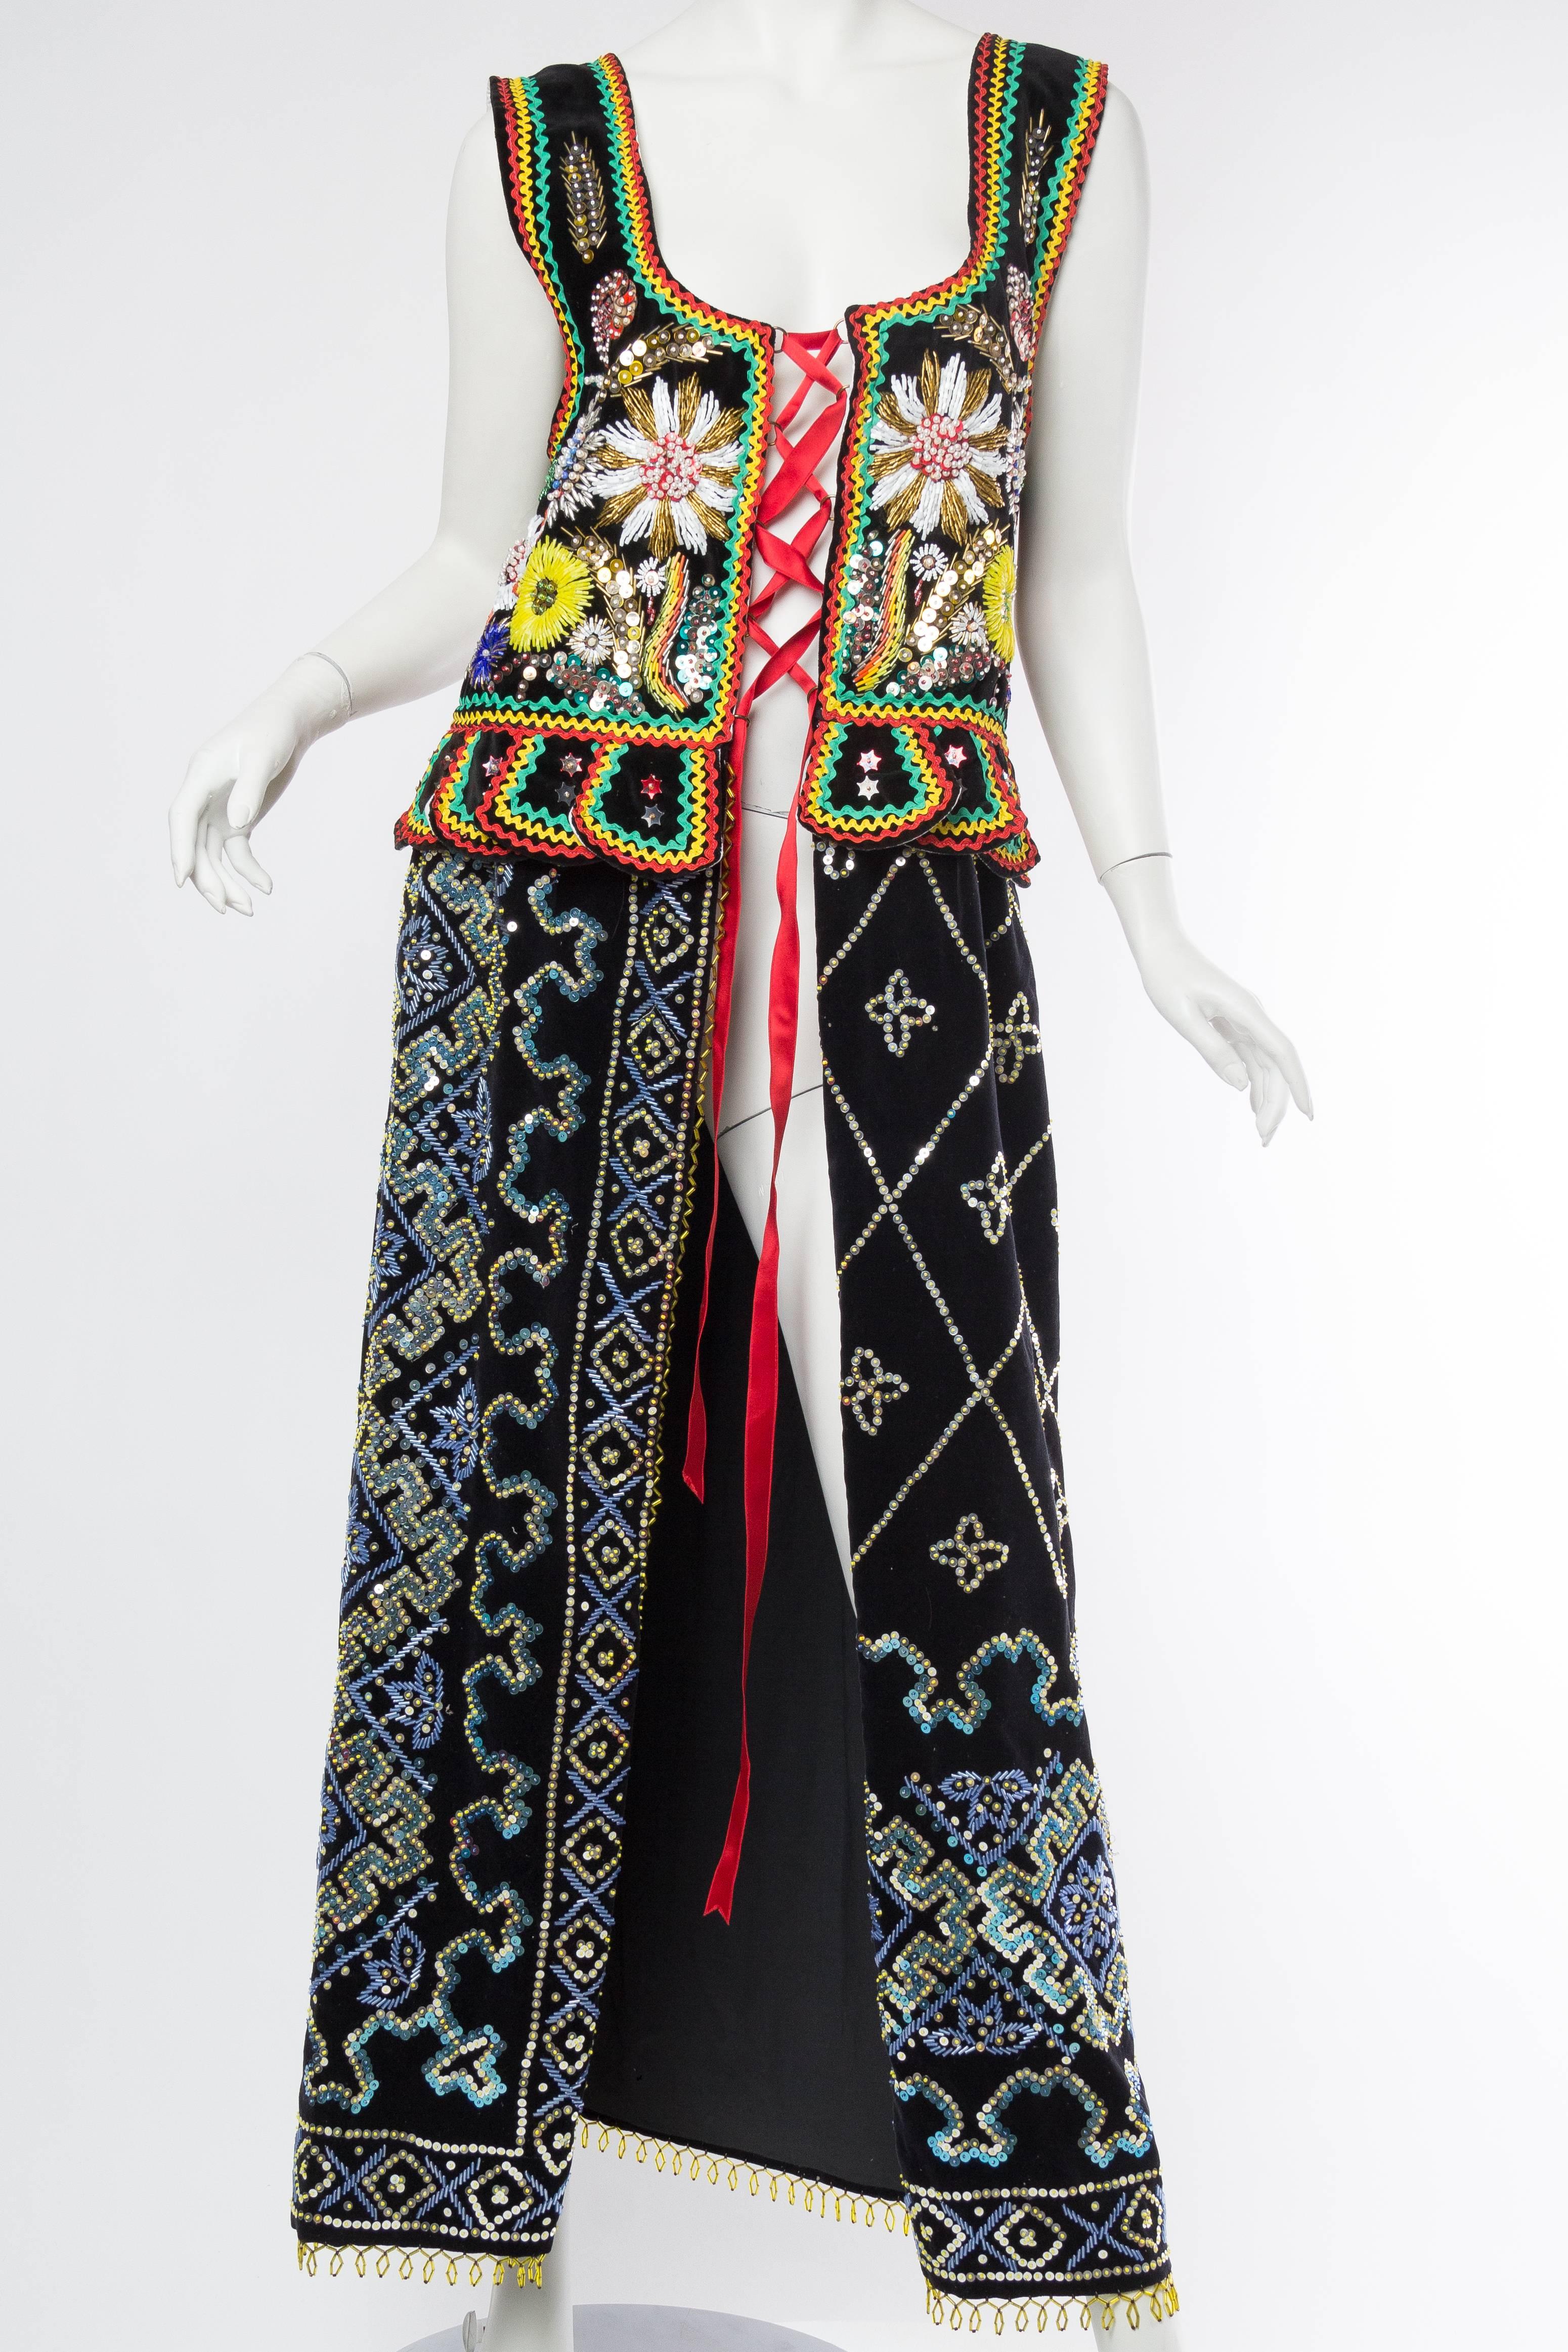 Antique Folkloric Beaded Velvet Over Dress gucci style